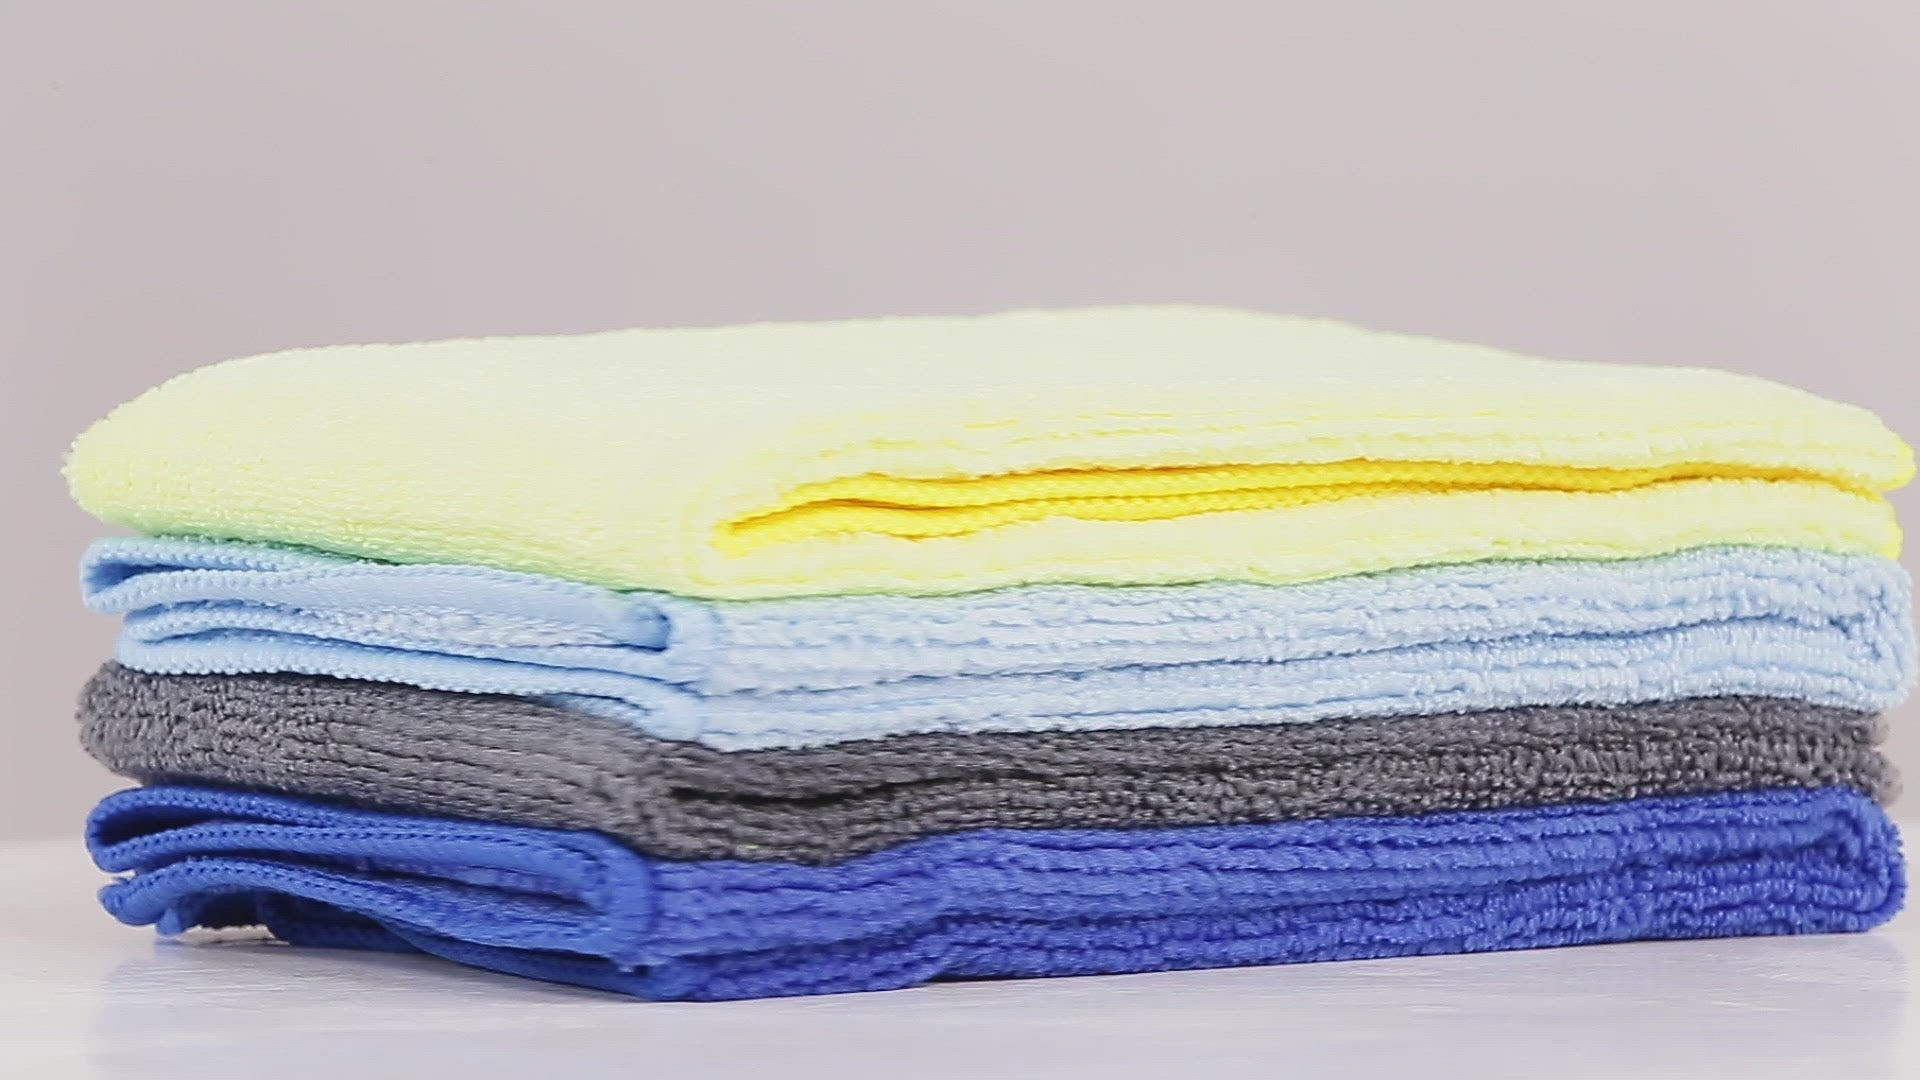 Auto Drive Microfiber Multi-Purpose Microfiber Towel, Cleaning Towel 2  Pack, Assorted Colors 